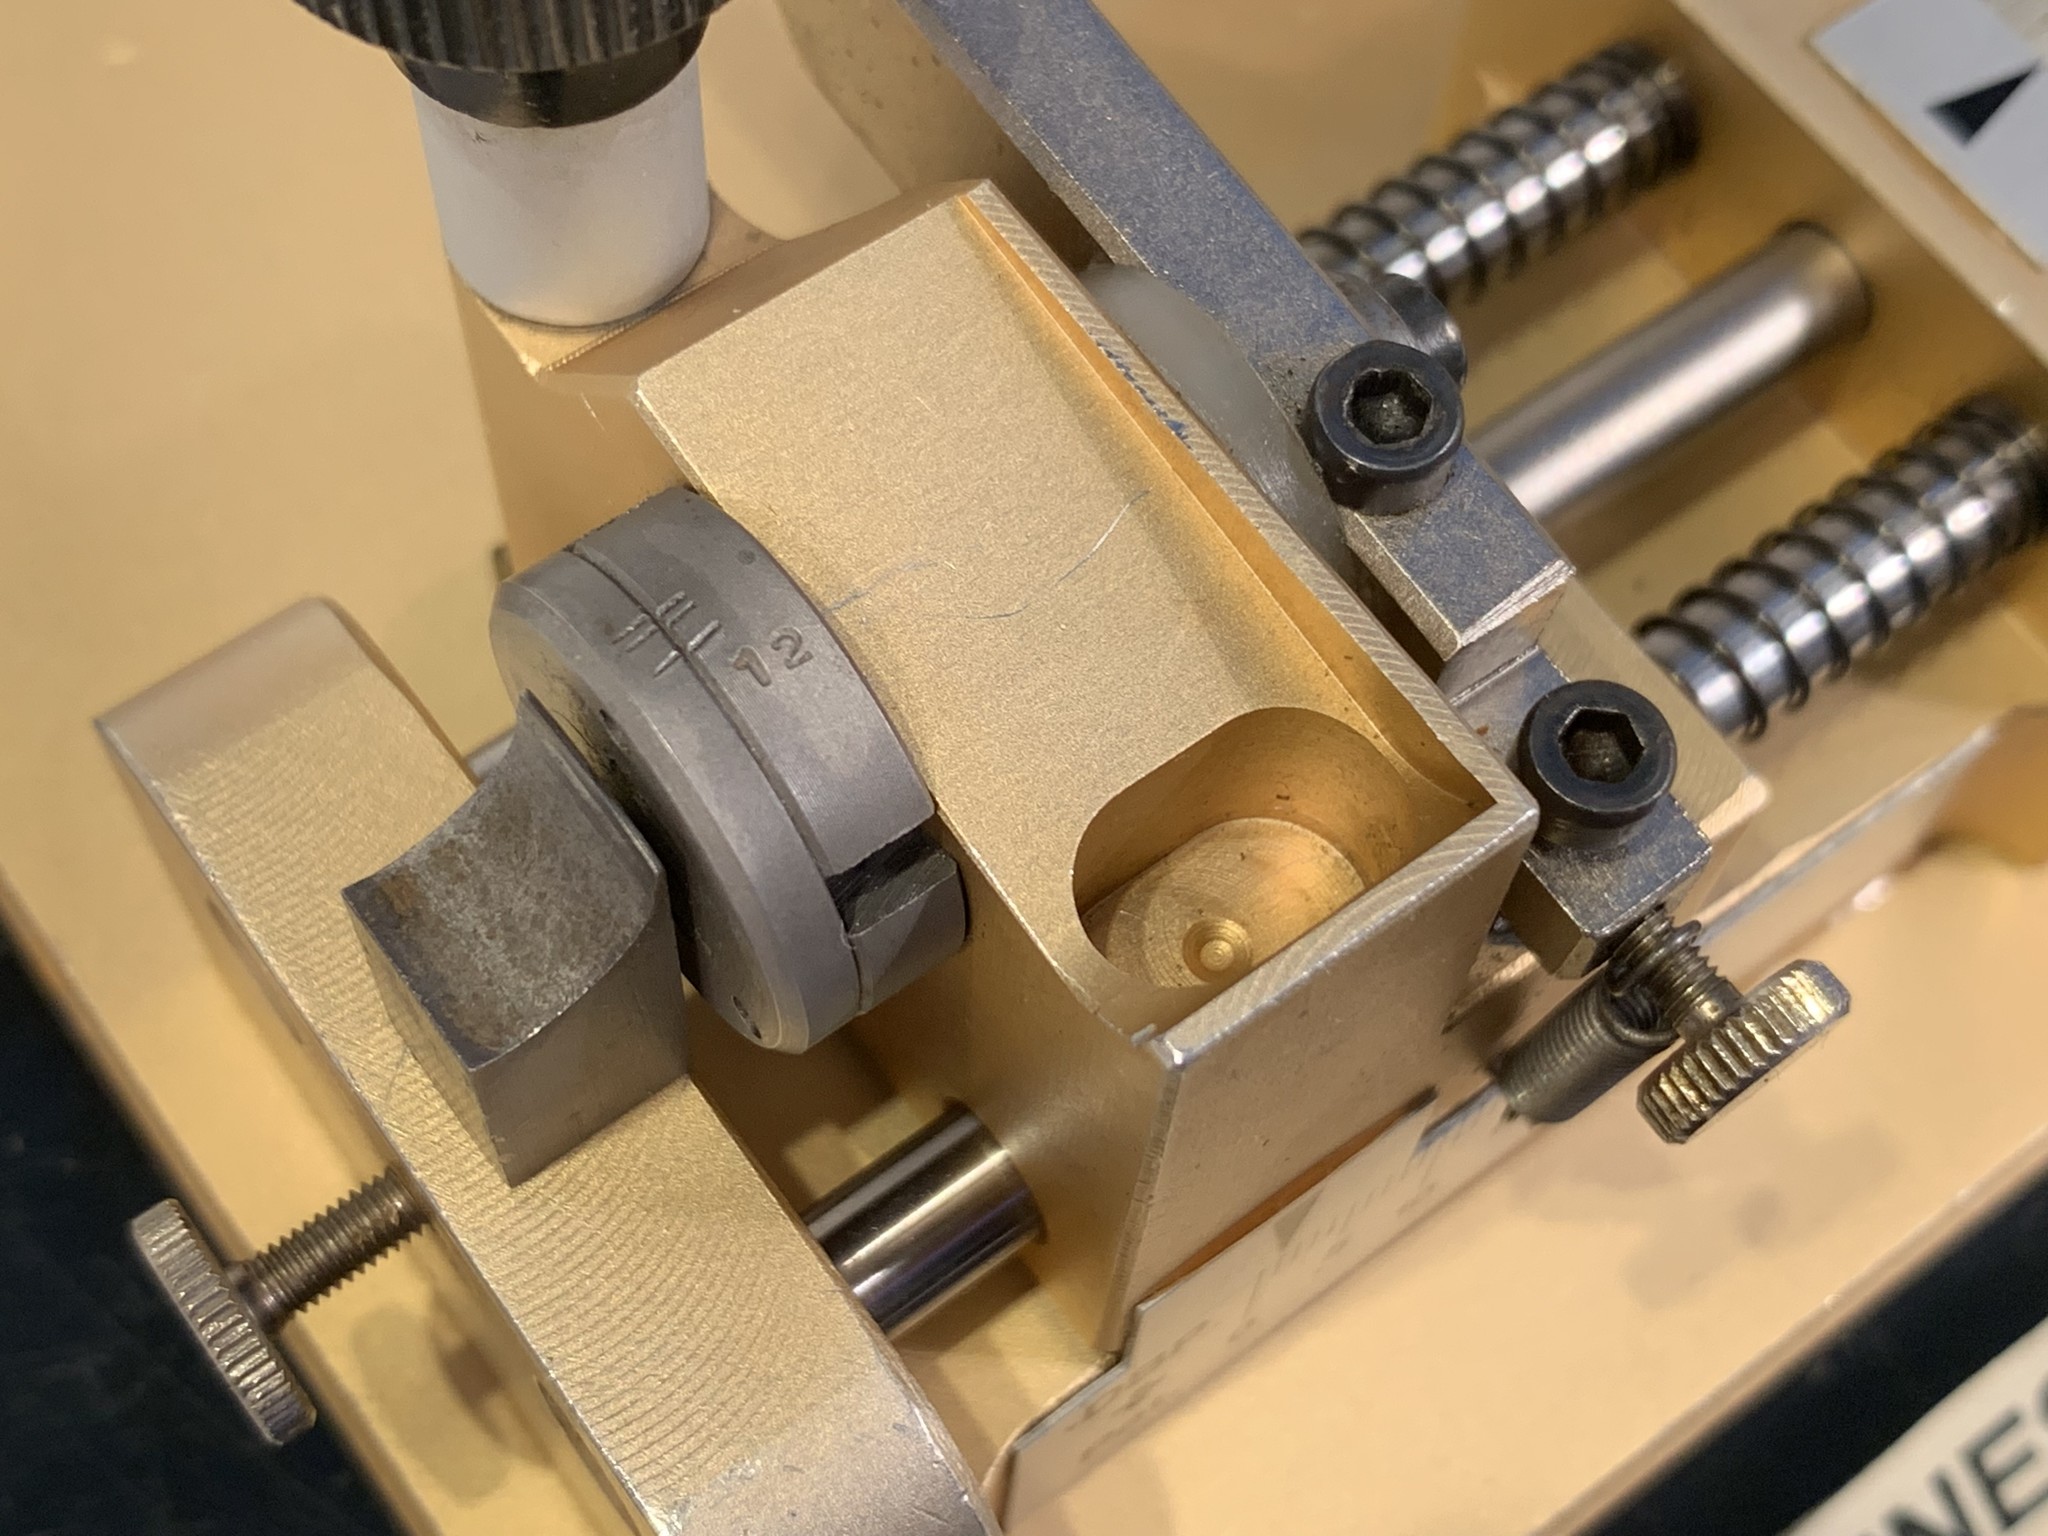 Bergeon 5832 watchmaker tool for shortening winding stems - Niels Machines